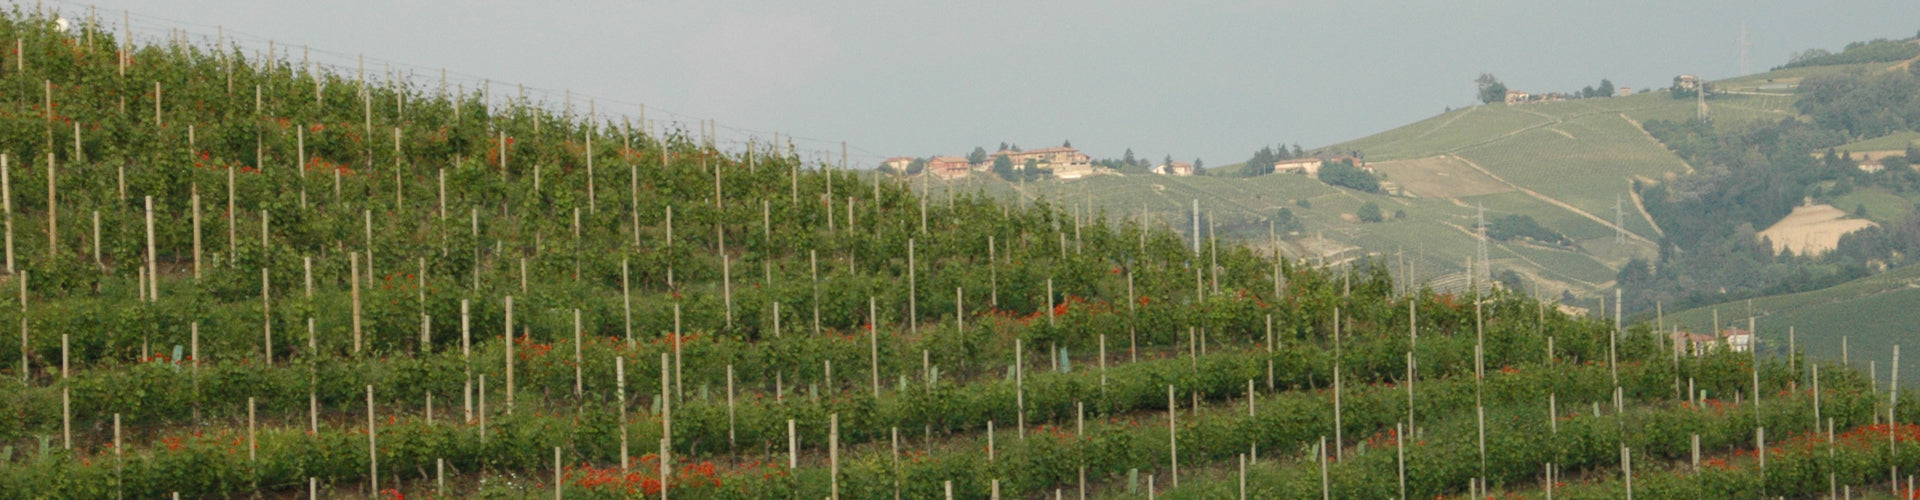 Castello di Neive Vineyards in Barbaresco, Piedmont in Italy